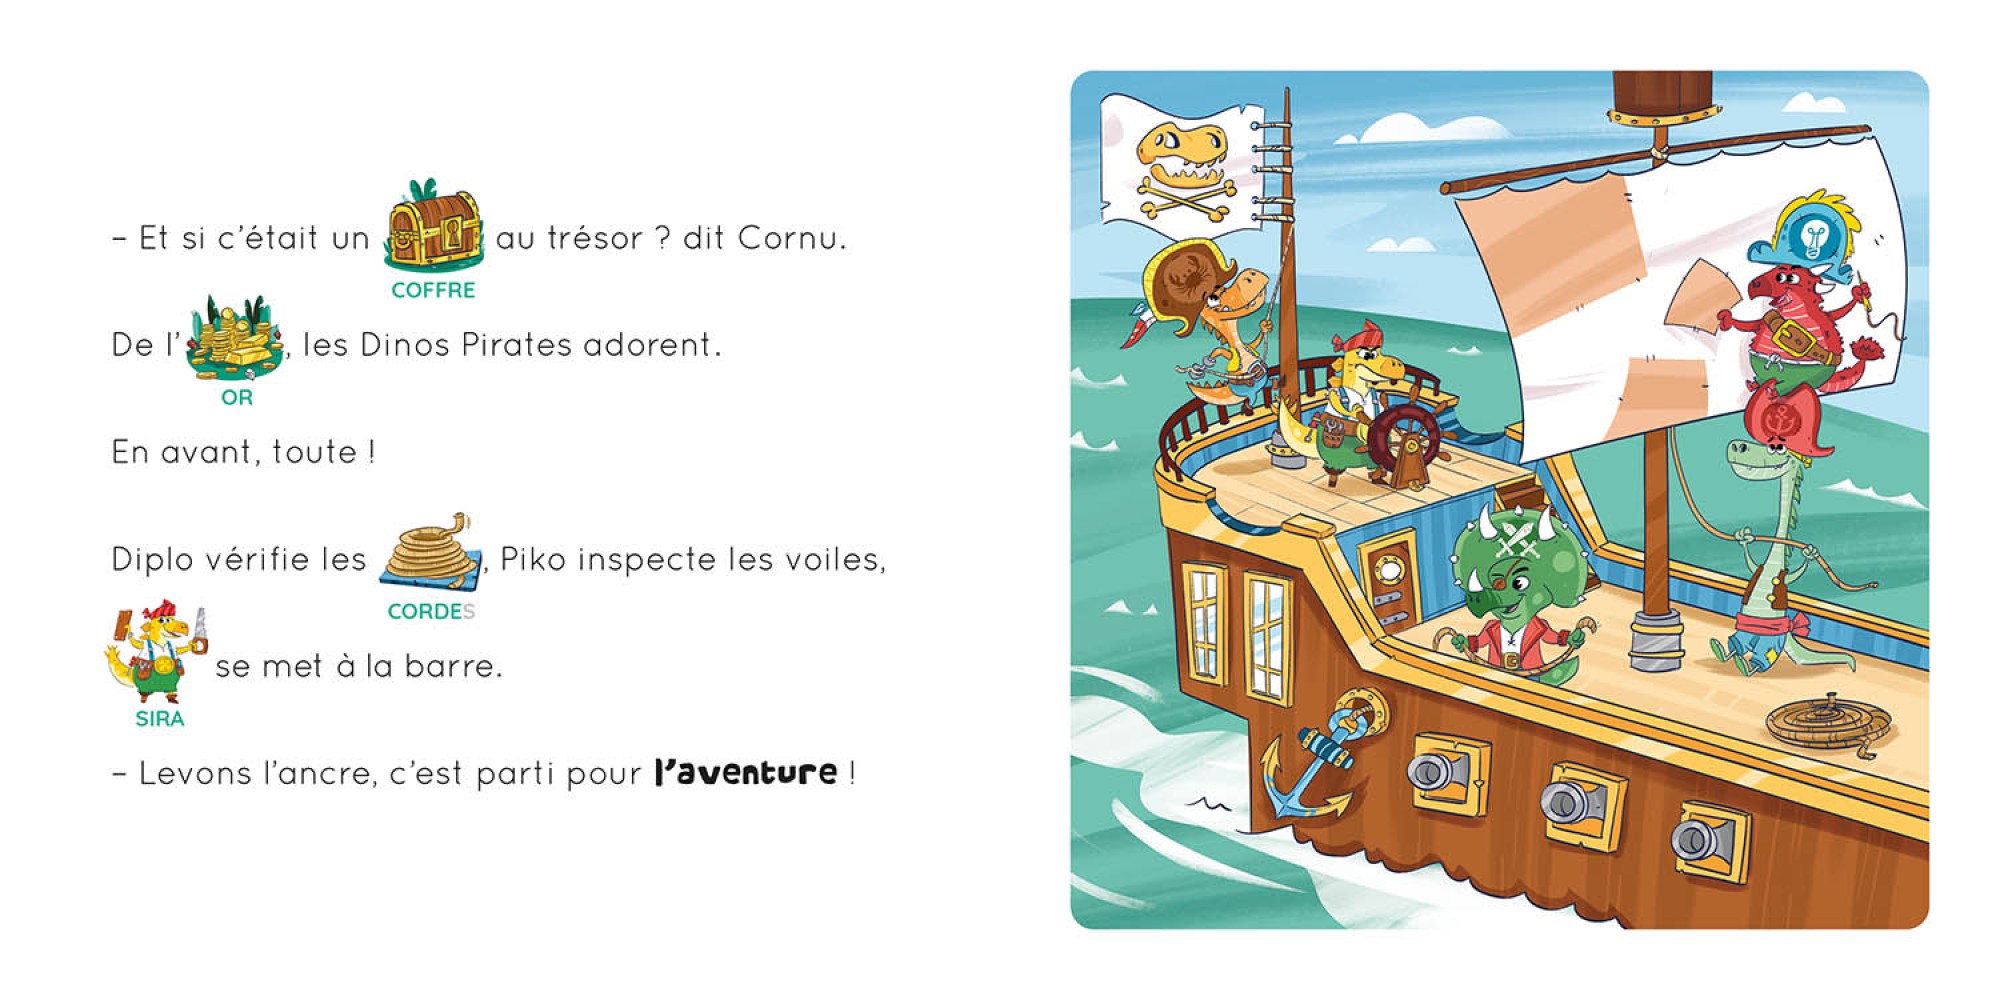 Les Dinos Pirates - À L'aventure !